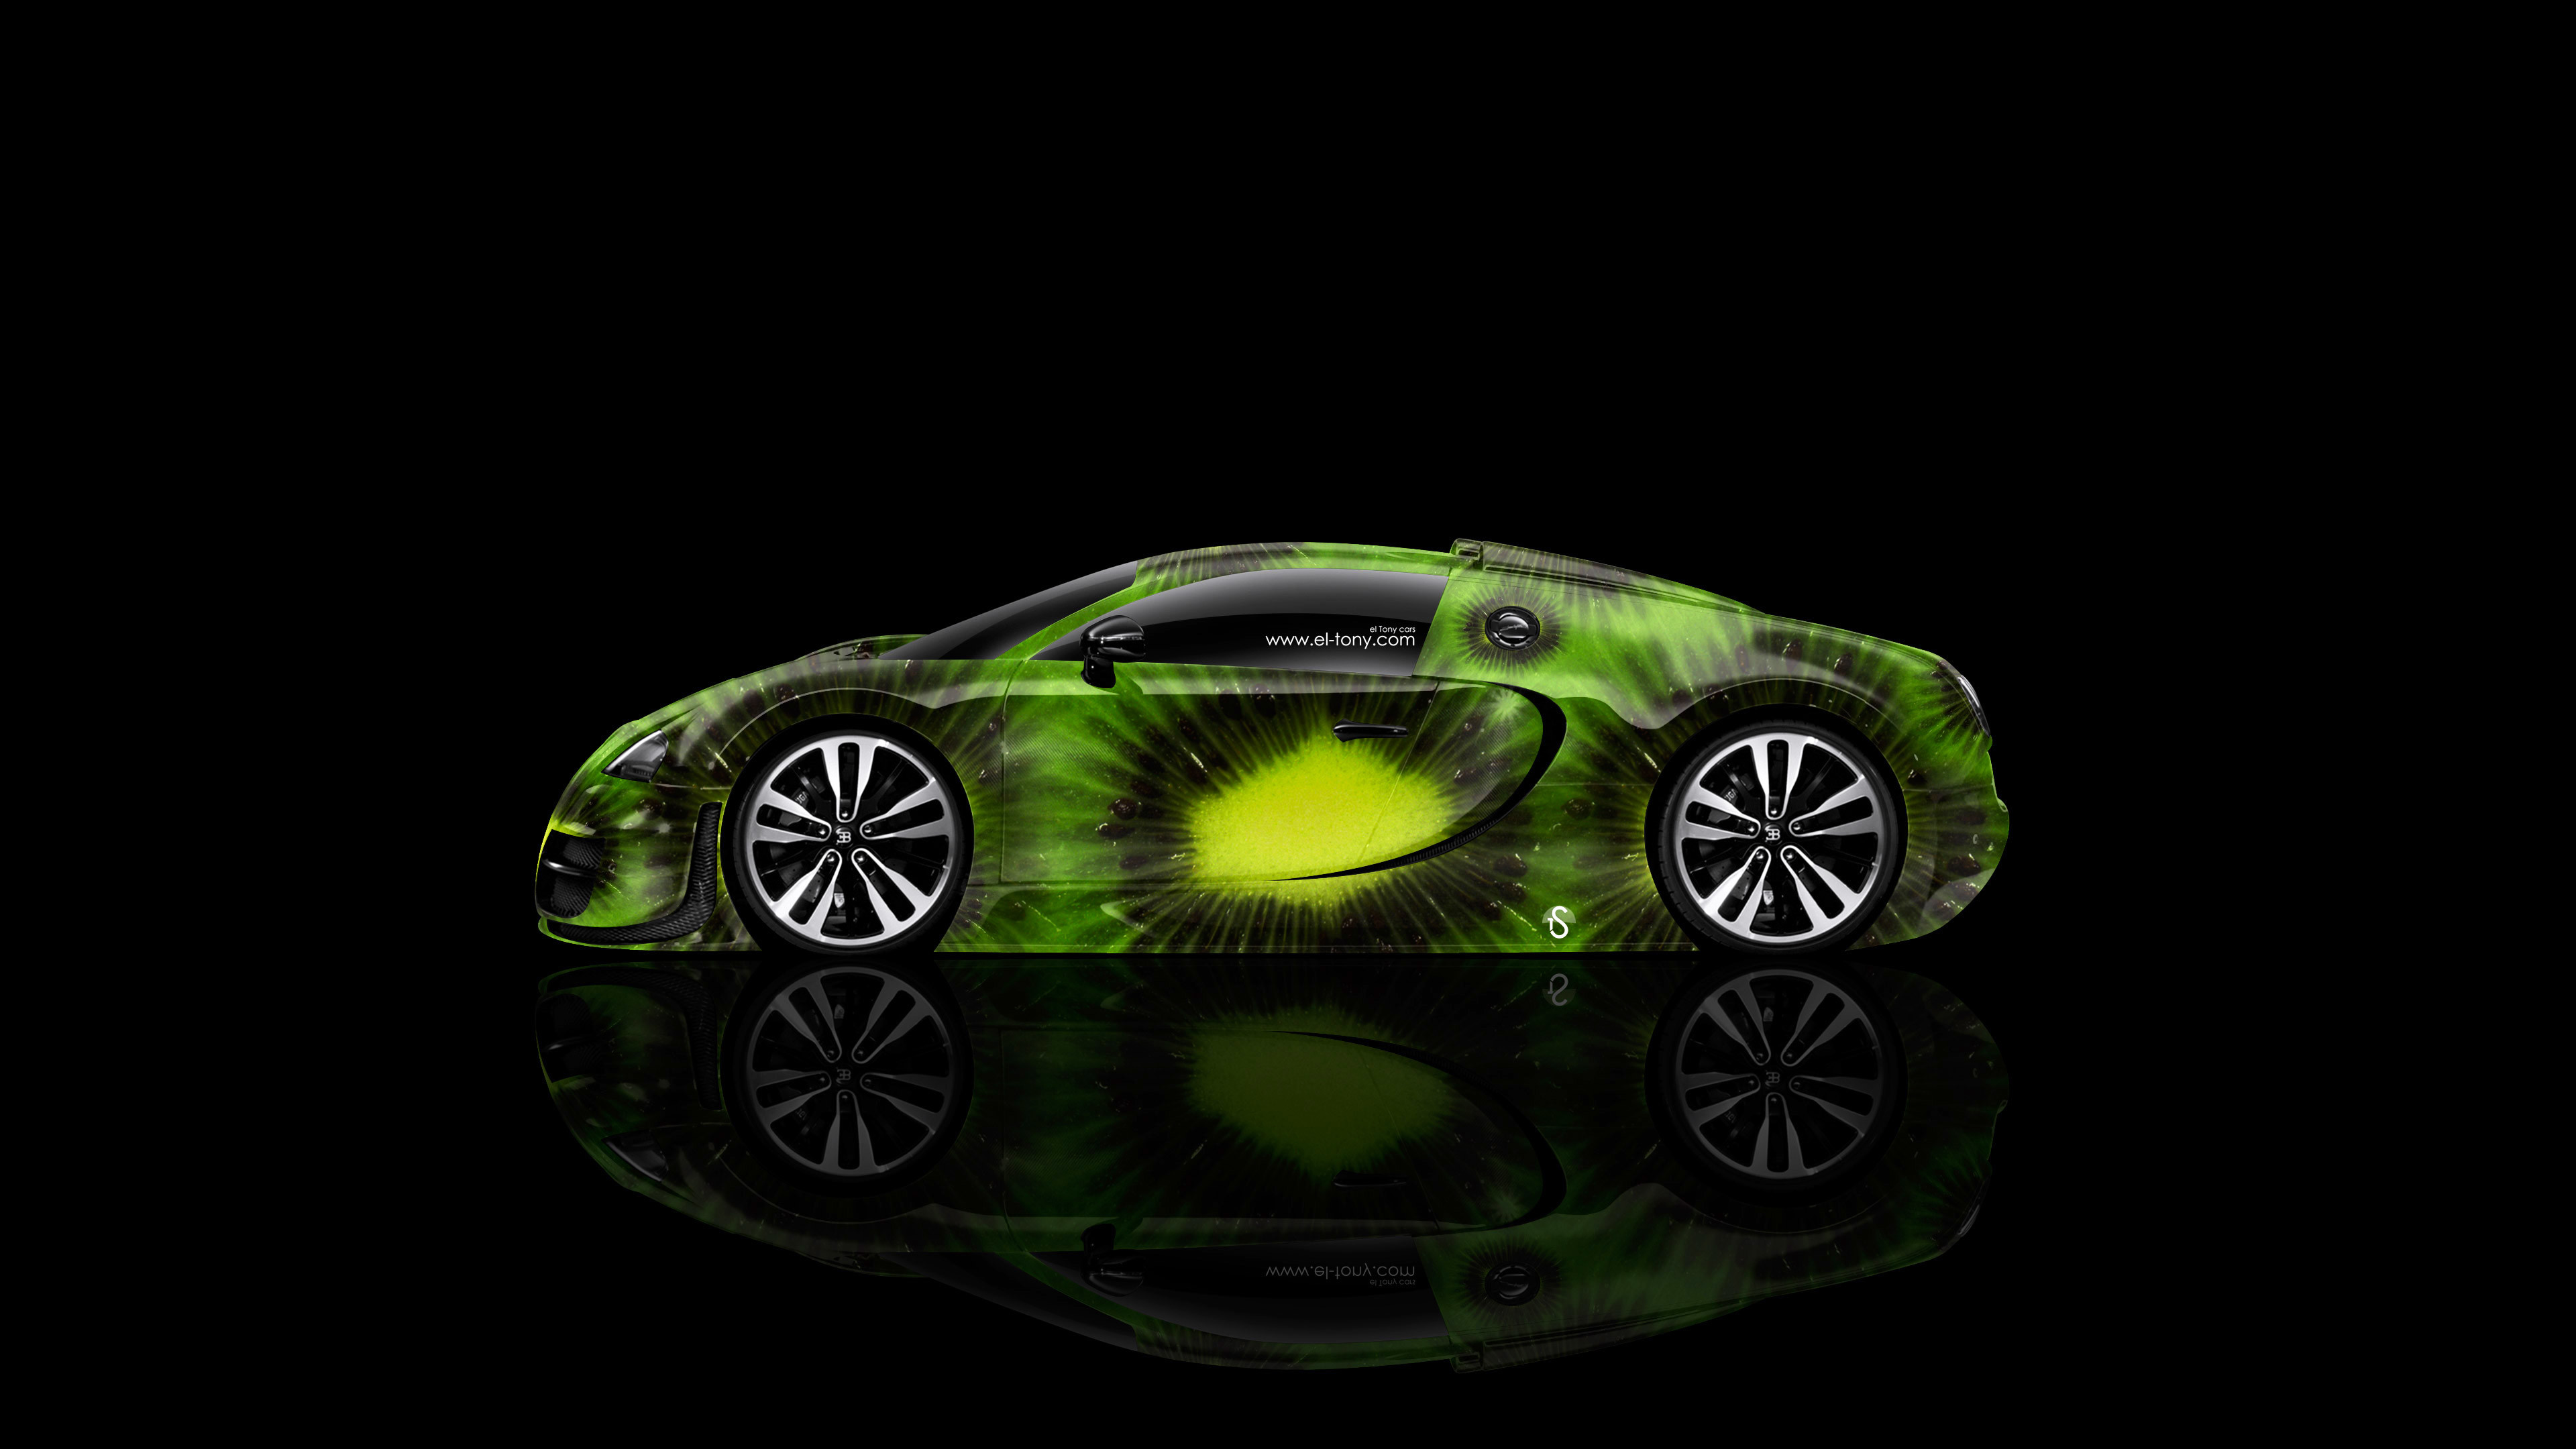 3840x2160 "Bugatti-Veyron-Side-Kiwi-Aerography-Car-2014-Green-Colors-4K-Wallpapers-design-by-Tony-Kokhan-www.el-tony.com_.jpg  (3840Ã2160) 4K Bugatti Veyron Side Kiwi ...